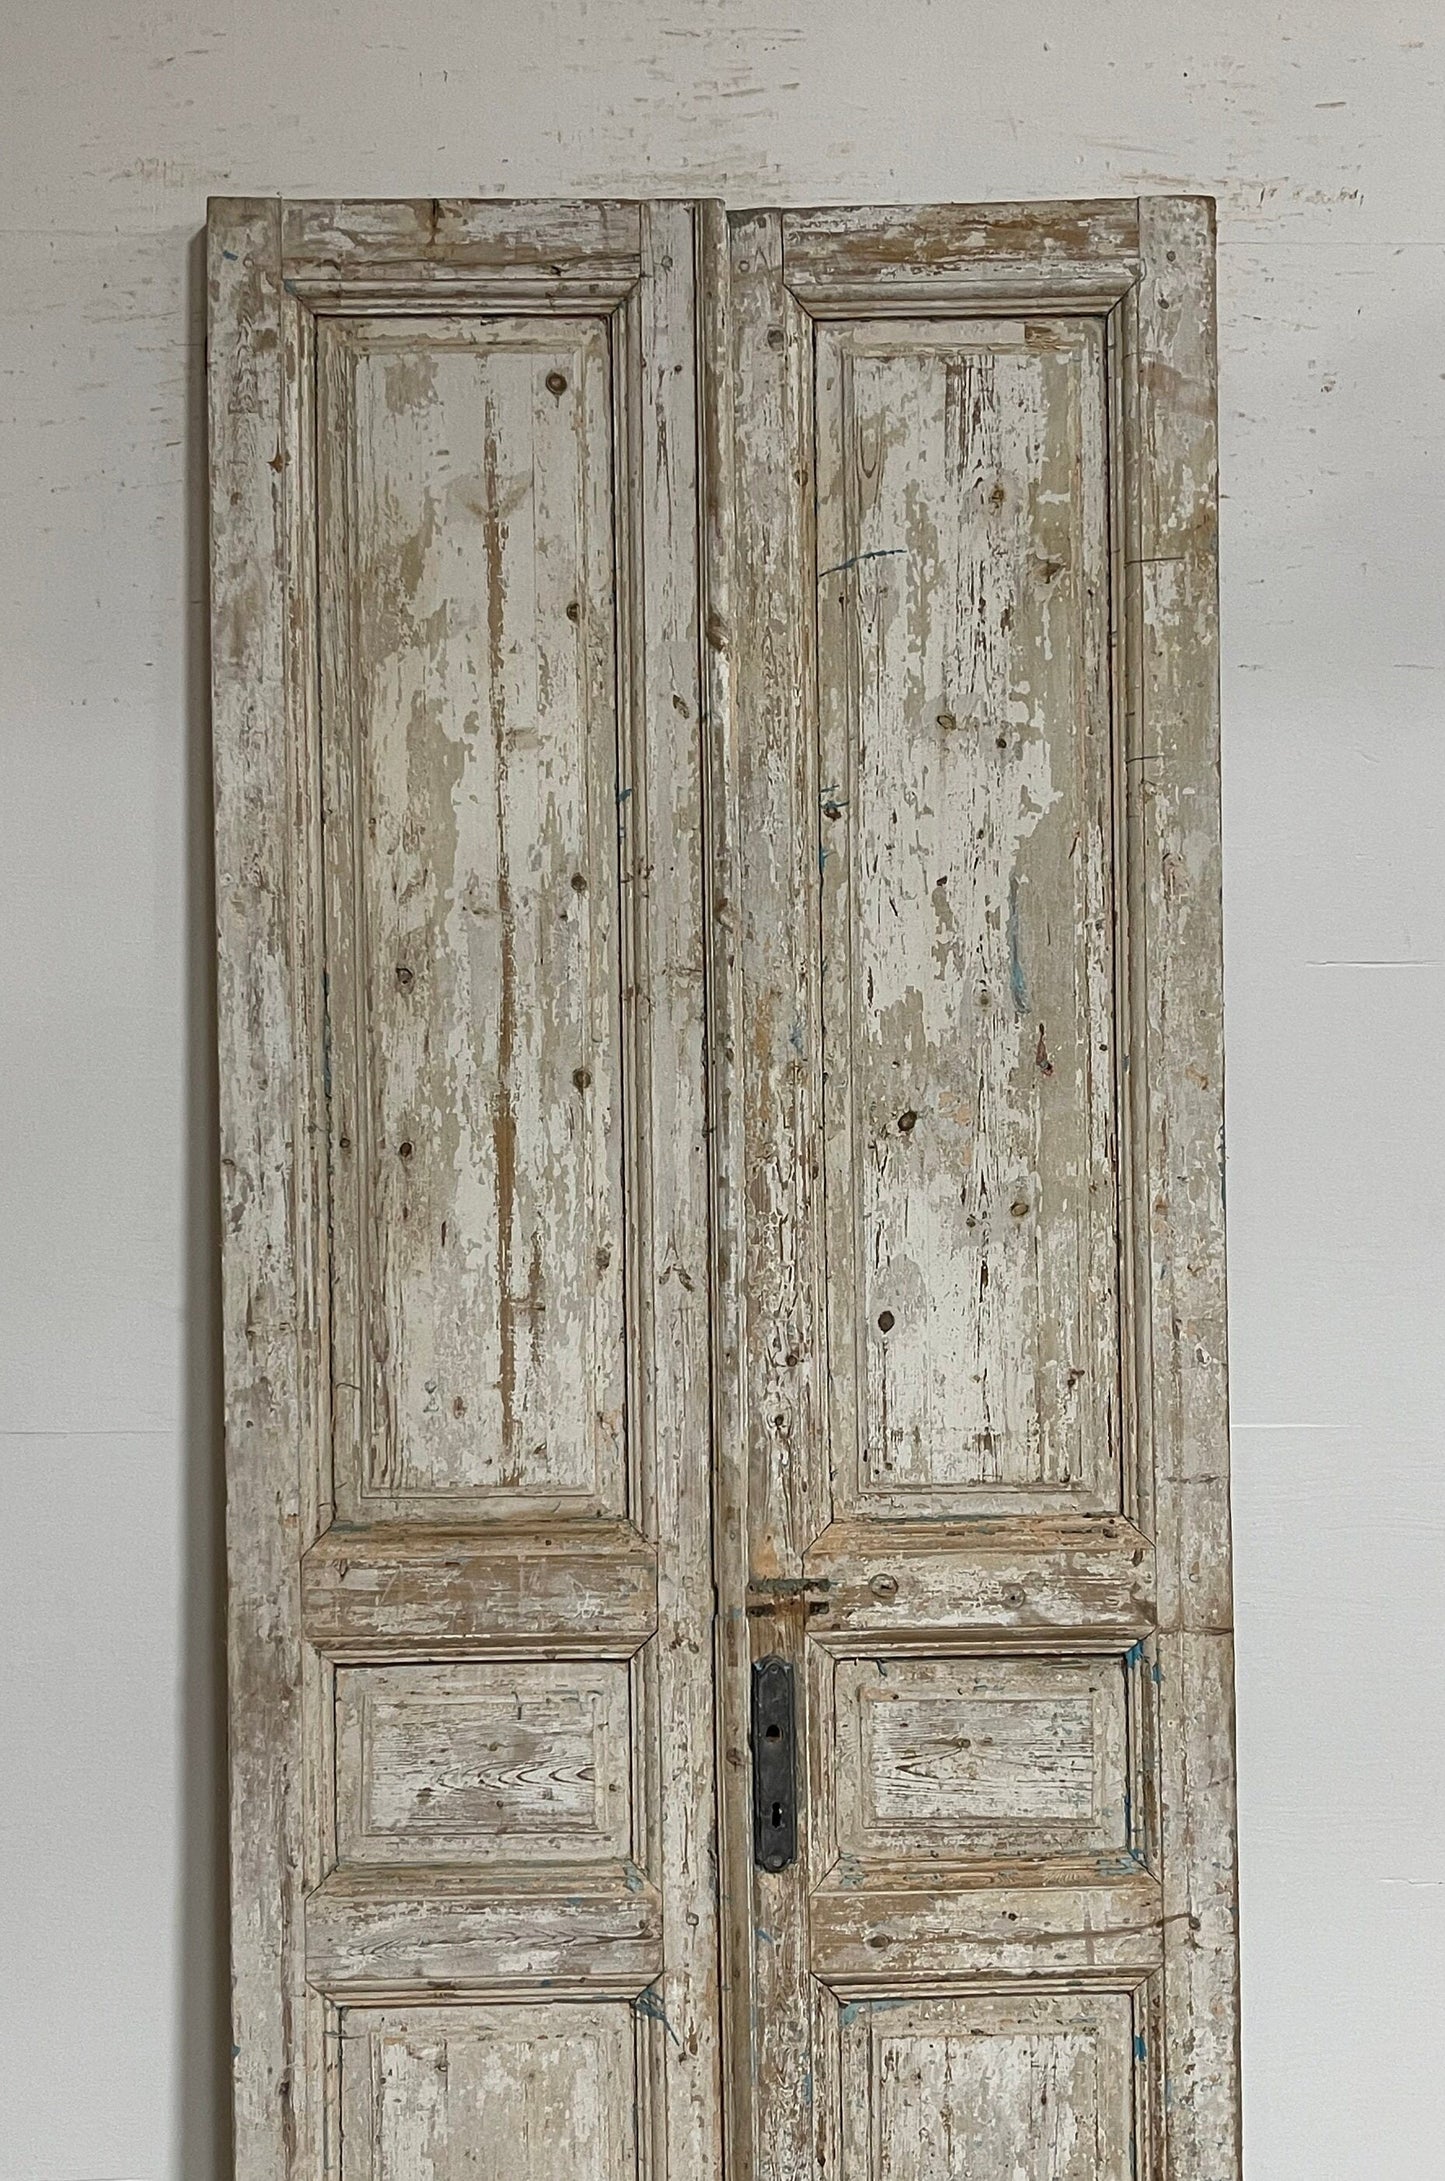 Antique French panel doors (96.75x39.75) G0119s